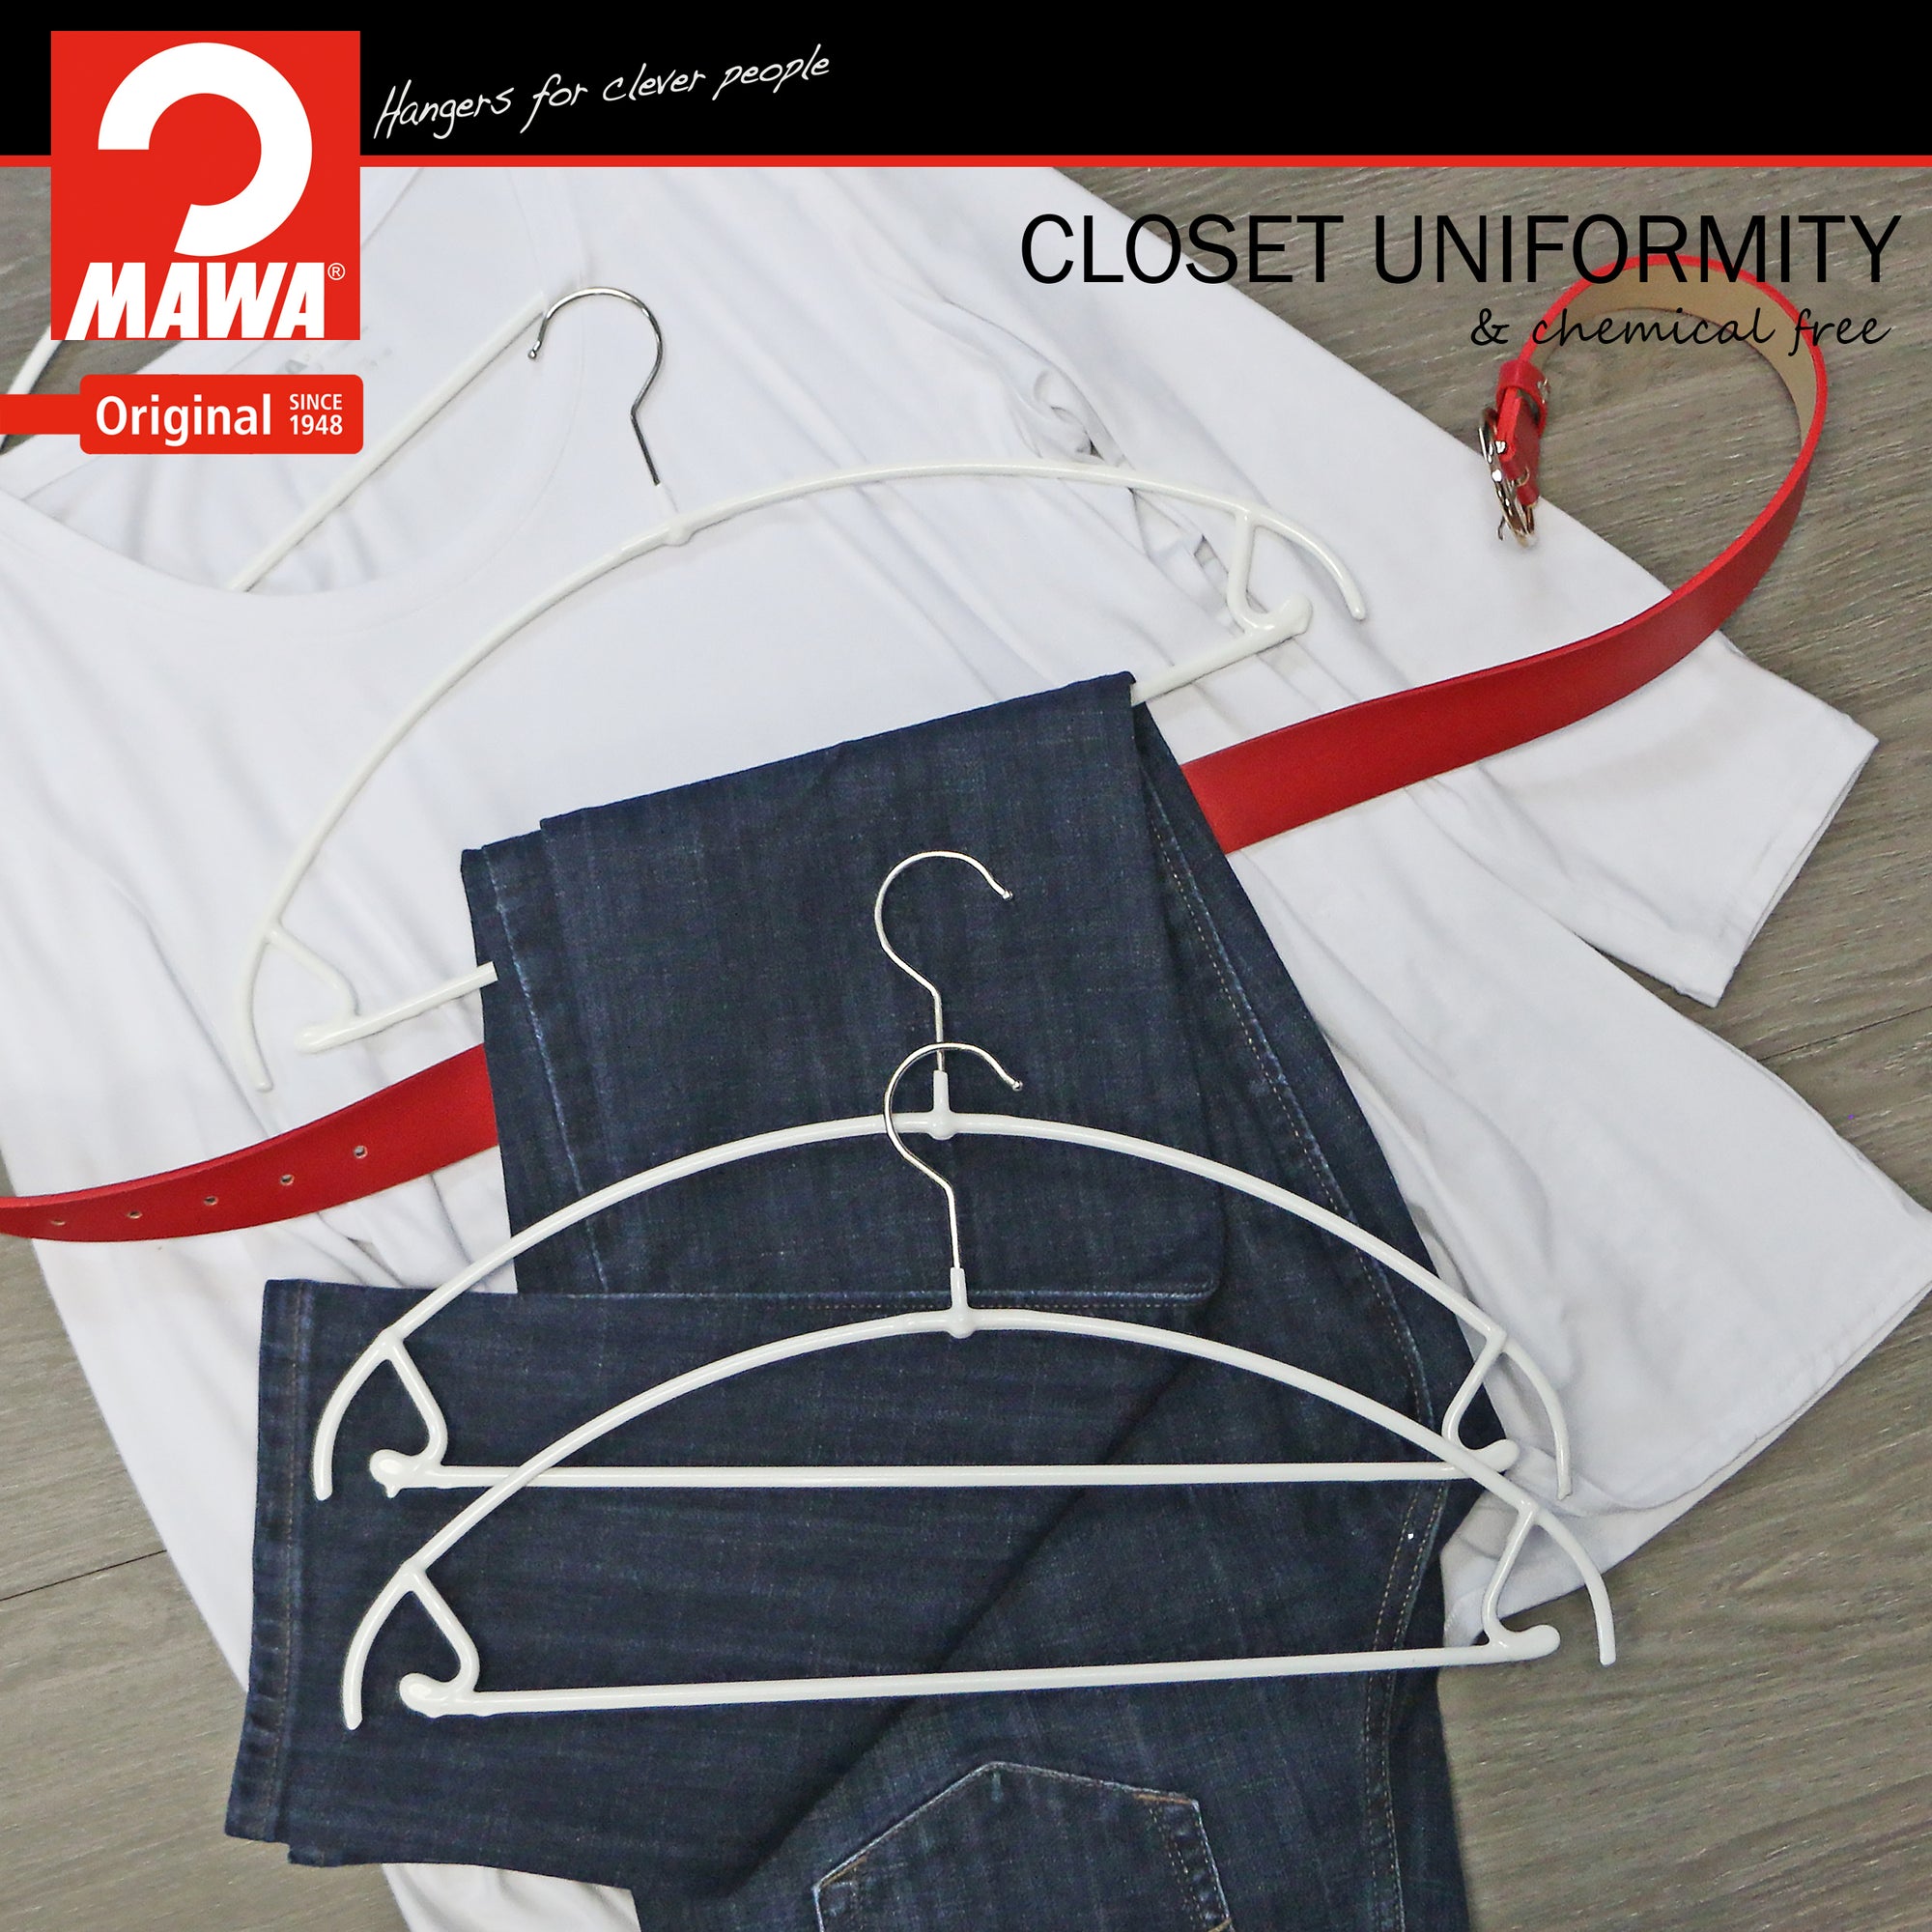 Euro Space-Saving Shirt with Pant Bar & Skirt Hook Hanger, 42-PTU, Bla –